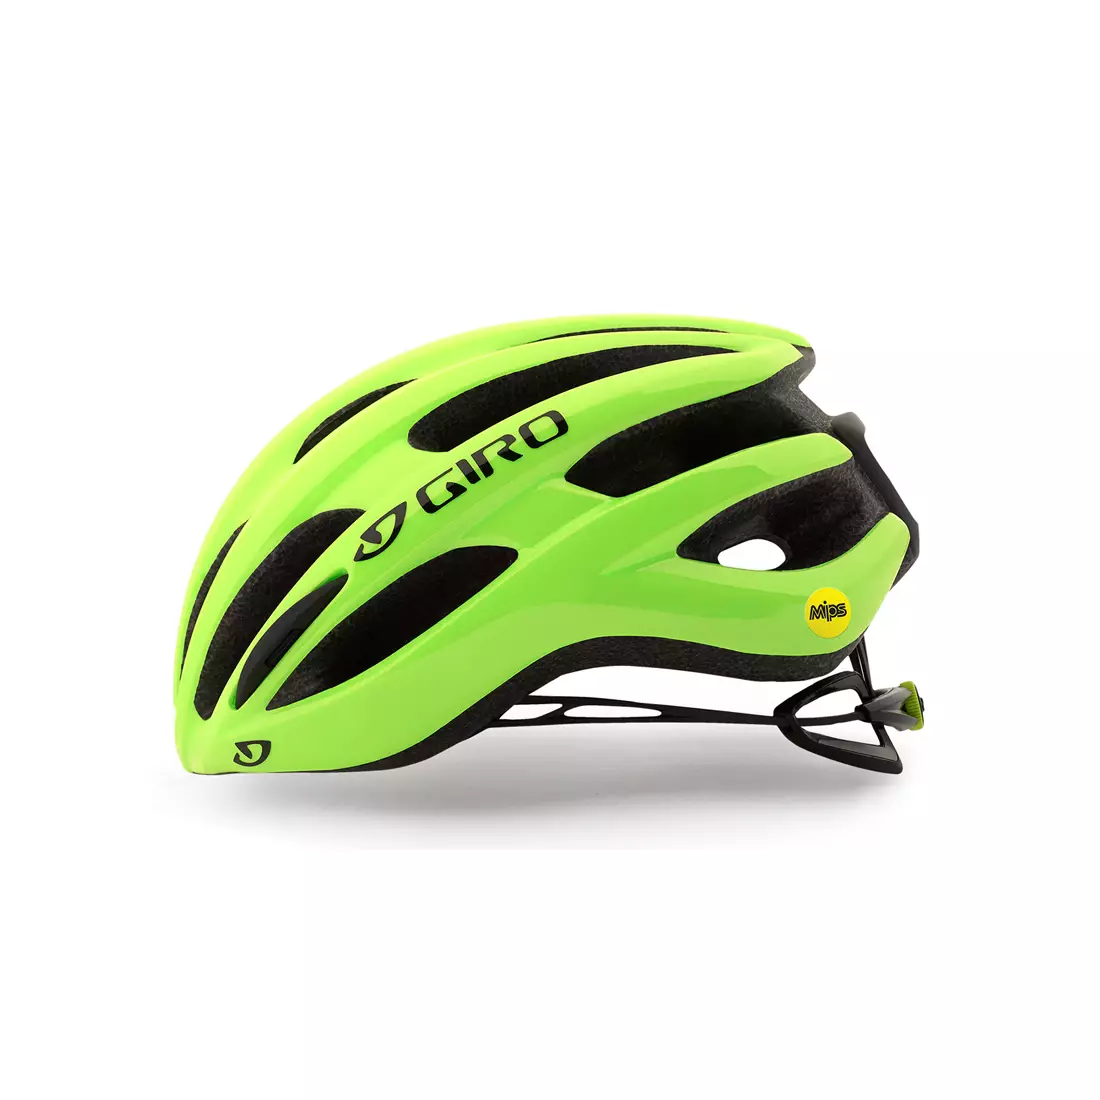 GIRO FORAY MIPS - fluoro bicycle helmet